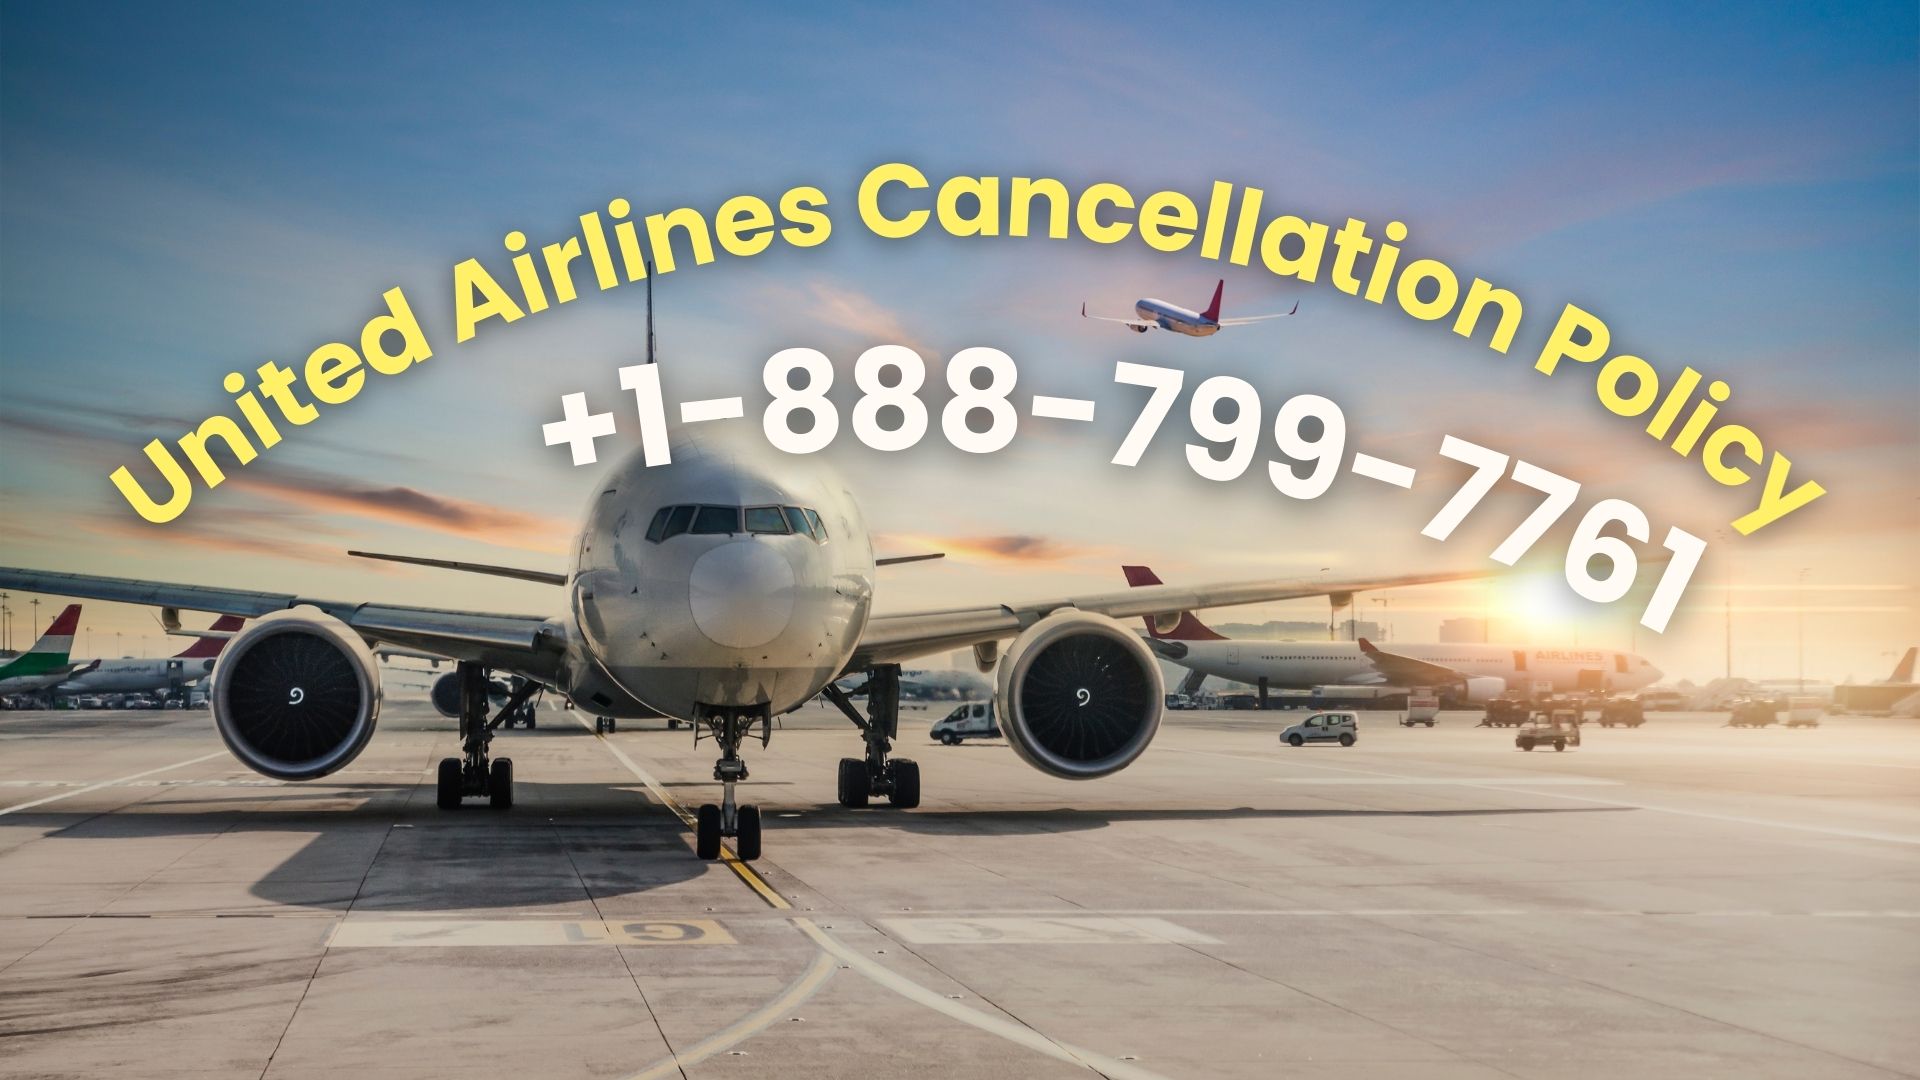 {{1️⃣8️⃣8️⃣8️⃣7️⃣9️⃣9️⃣7️⃣7️⃣6️⃣1️⃣}} Unlocking United Airlines Cancellation Policy Rules 2️⃣0️⃣2️⃣4️⃣